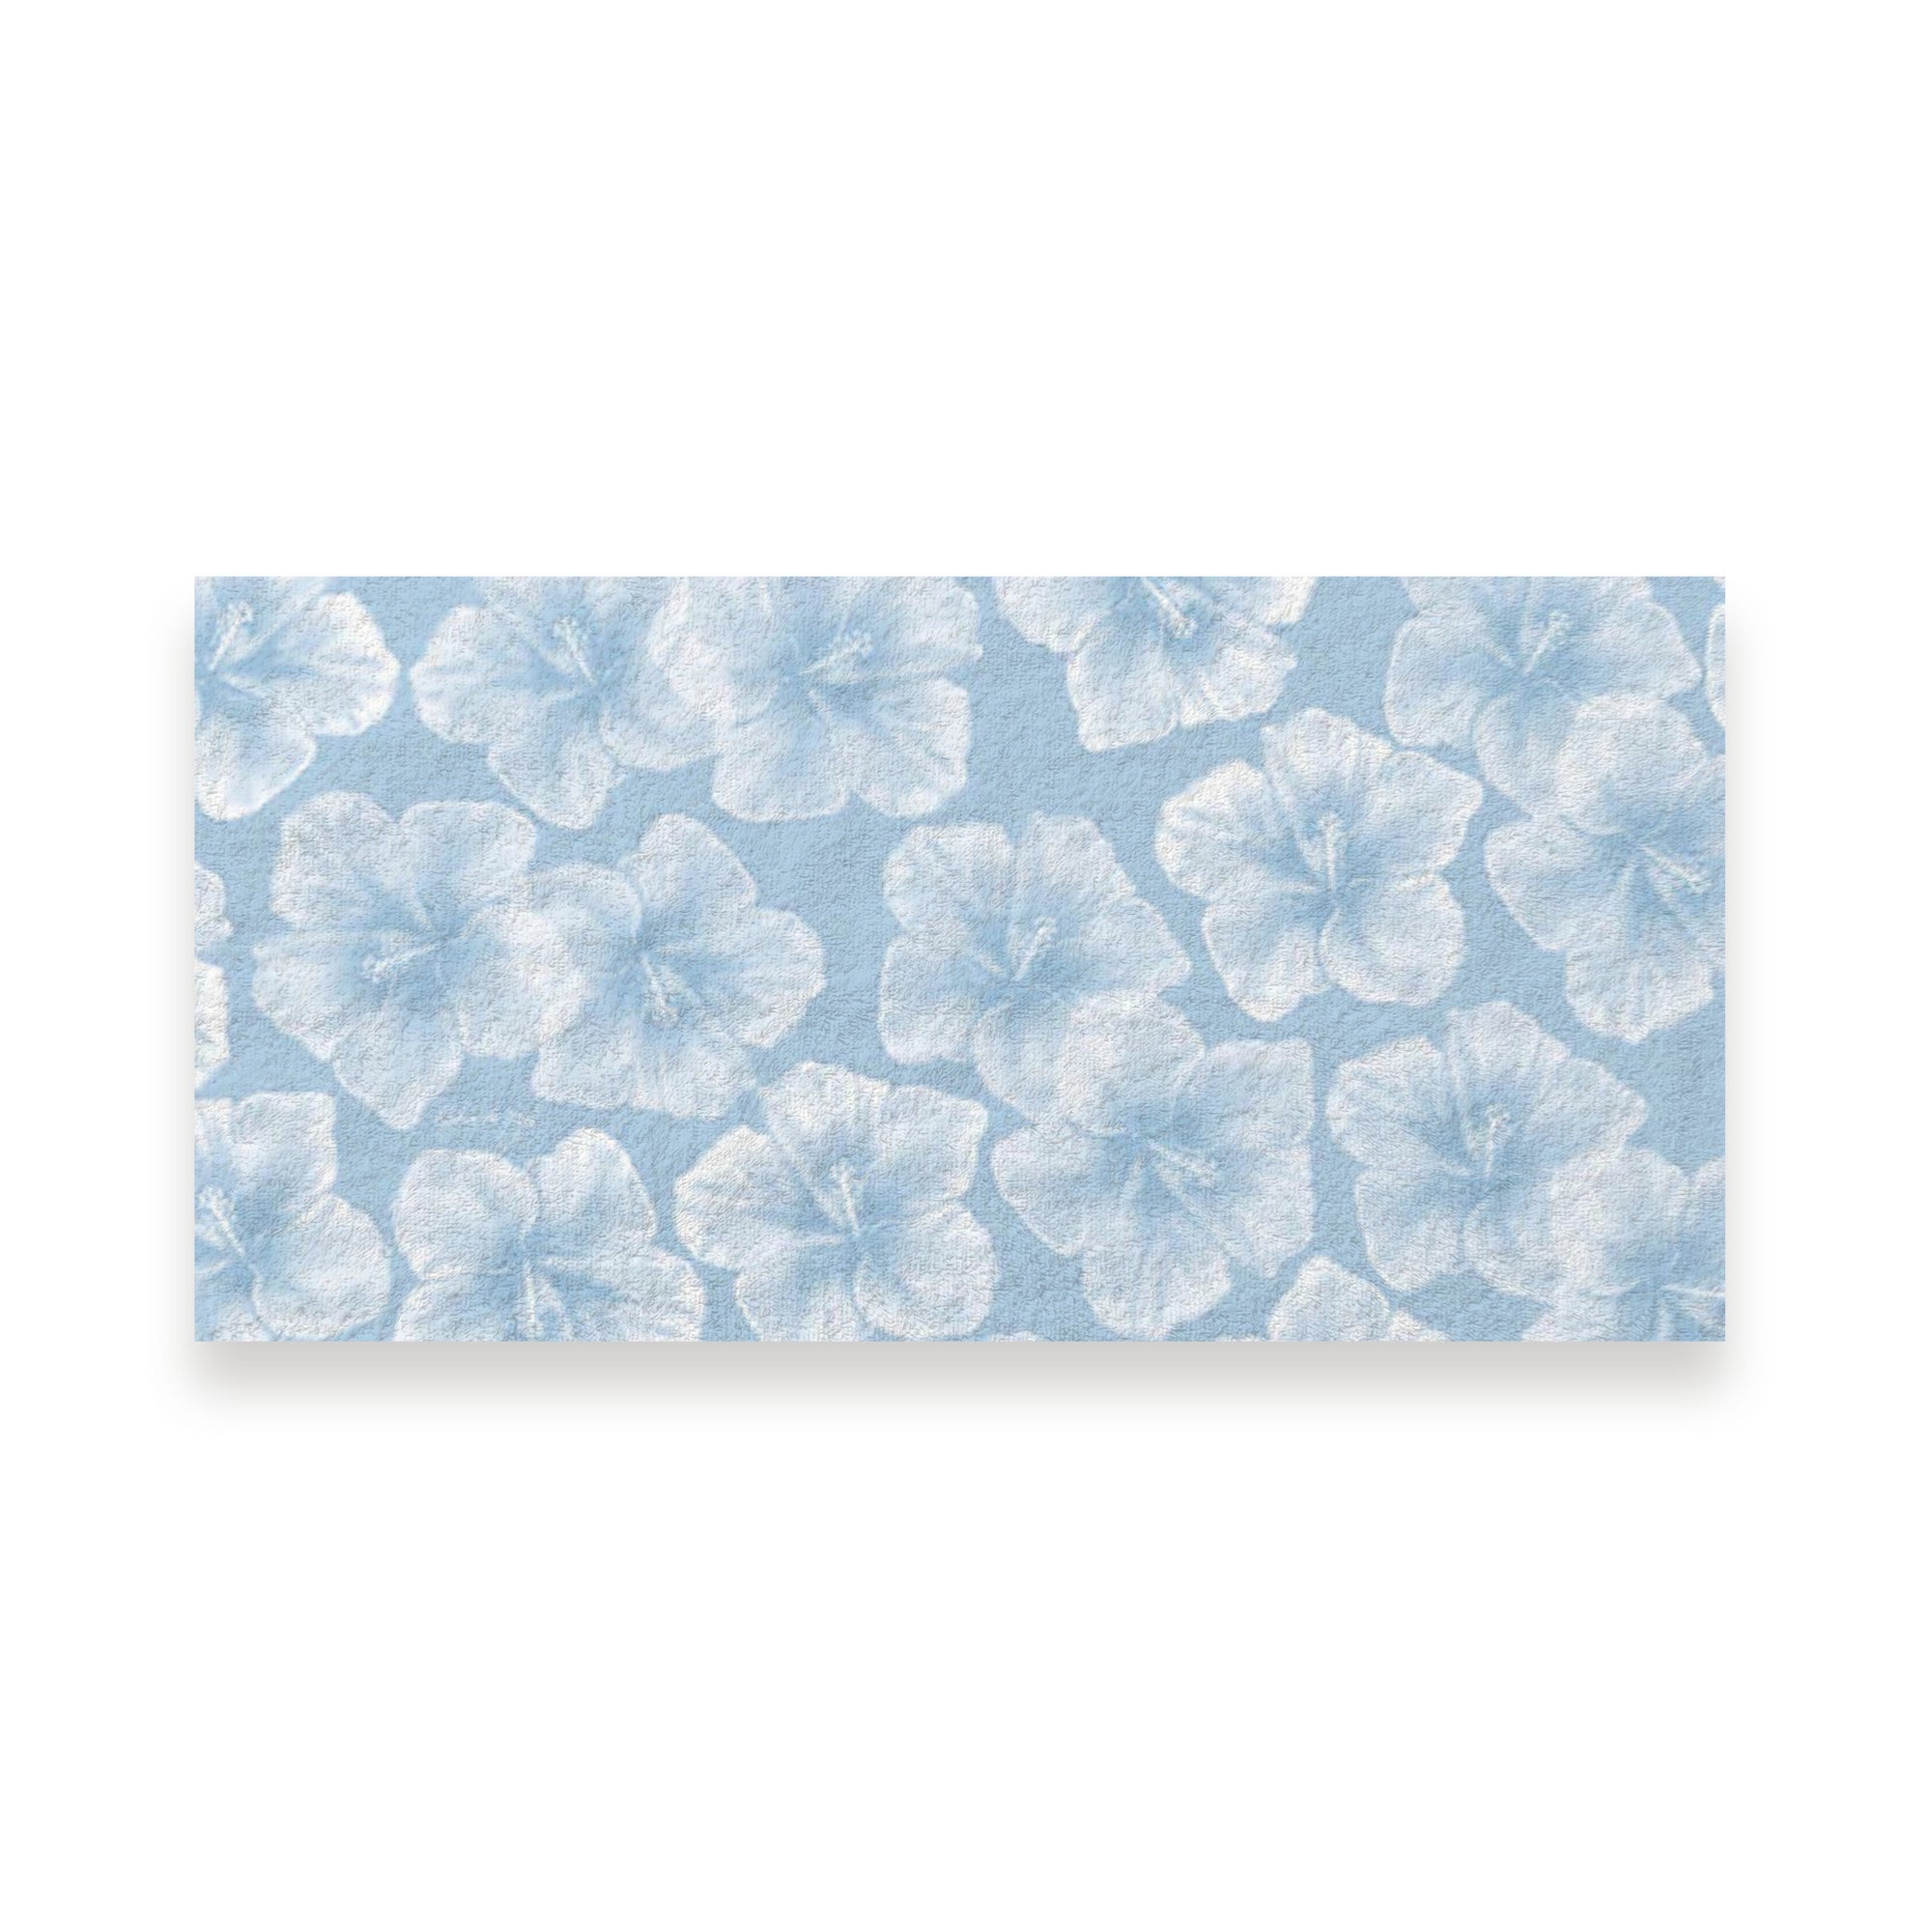 Pop-Up Mākeke - Aloha de Mele LLC - Sand Free Microfiber Towel - Summer Blue - Front View